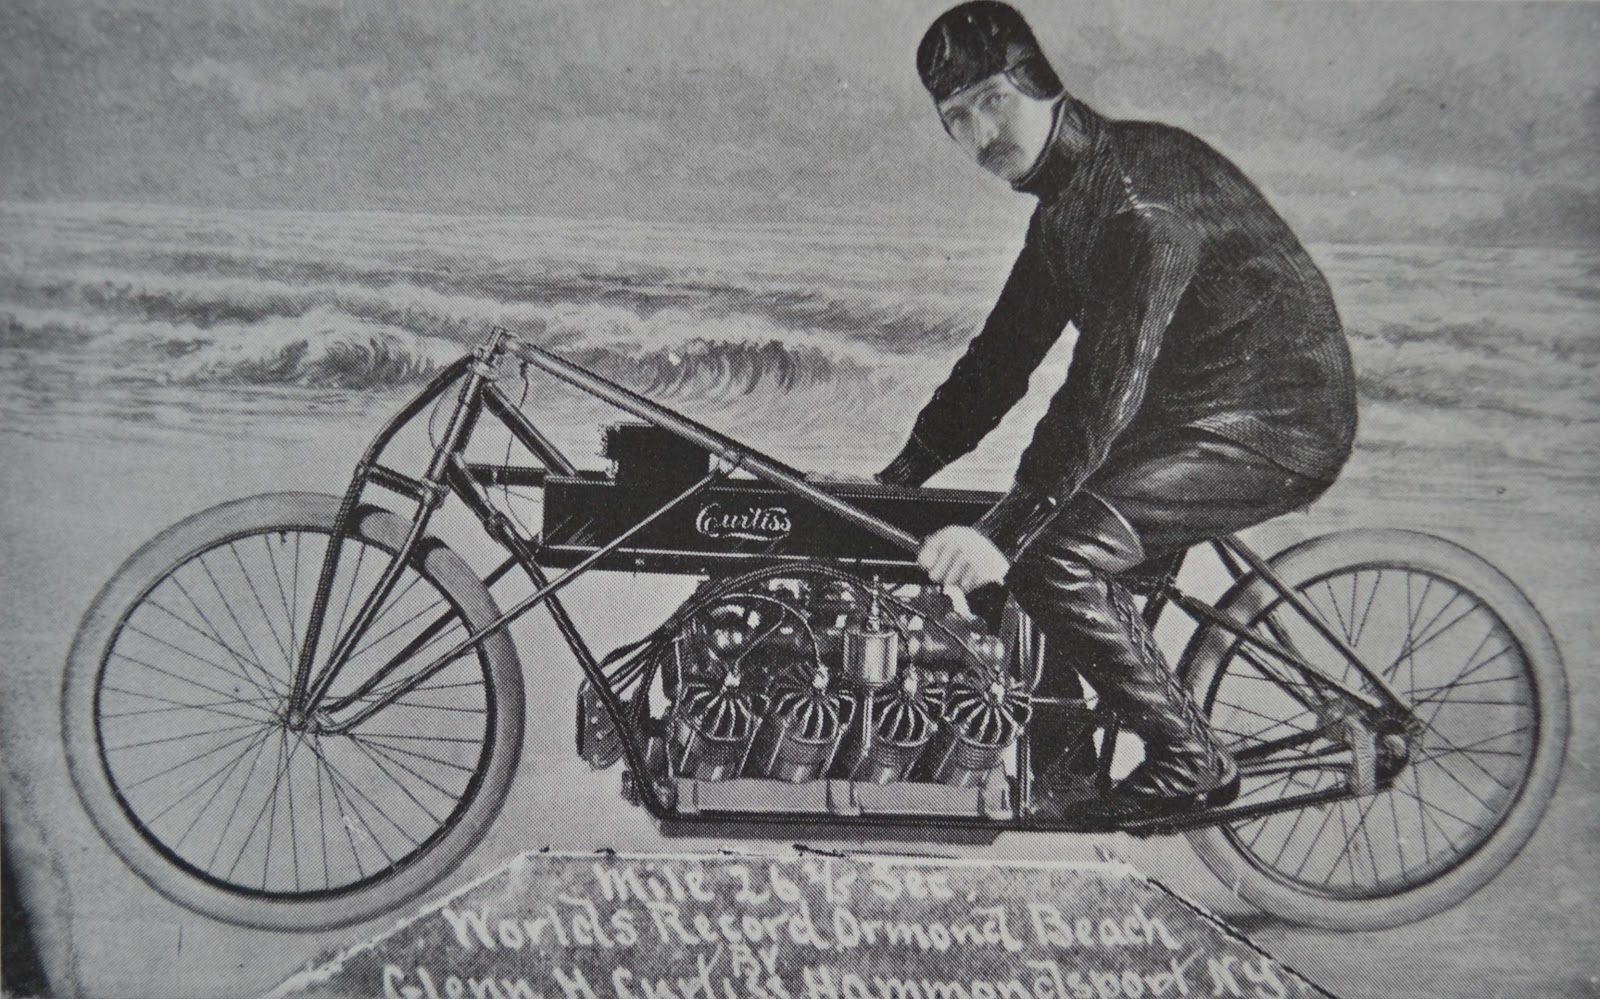 Glenn Curtiss Motorcycle